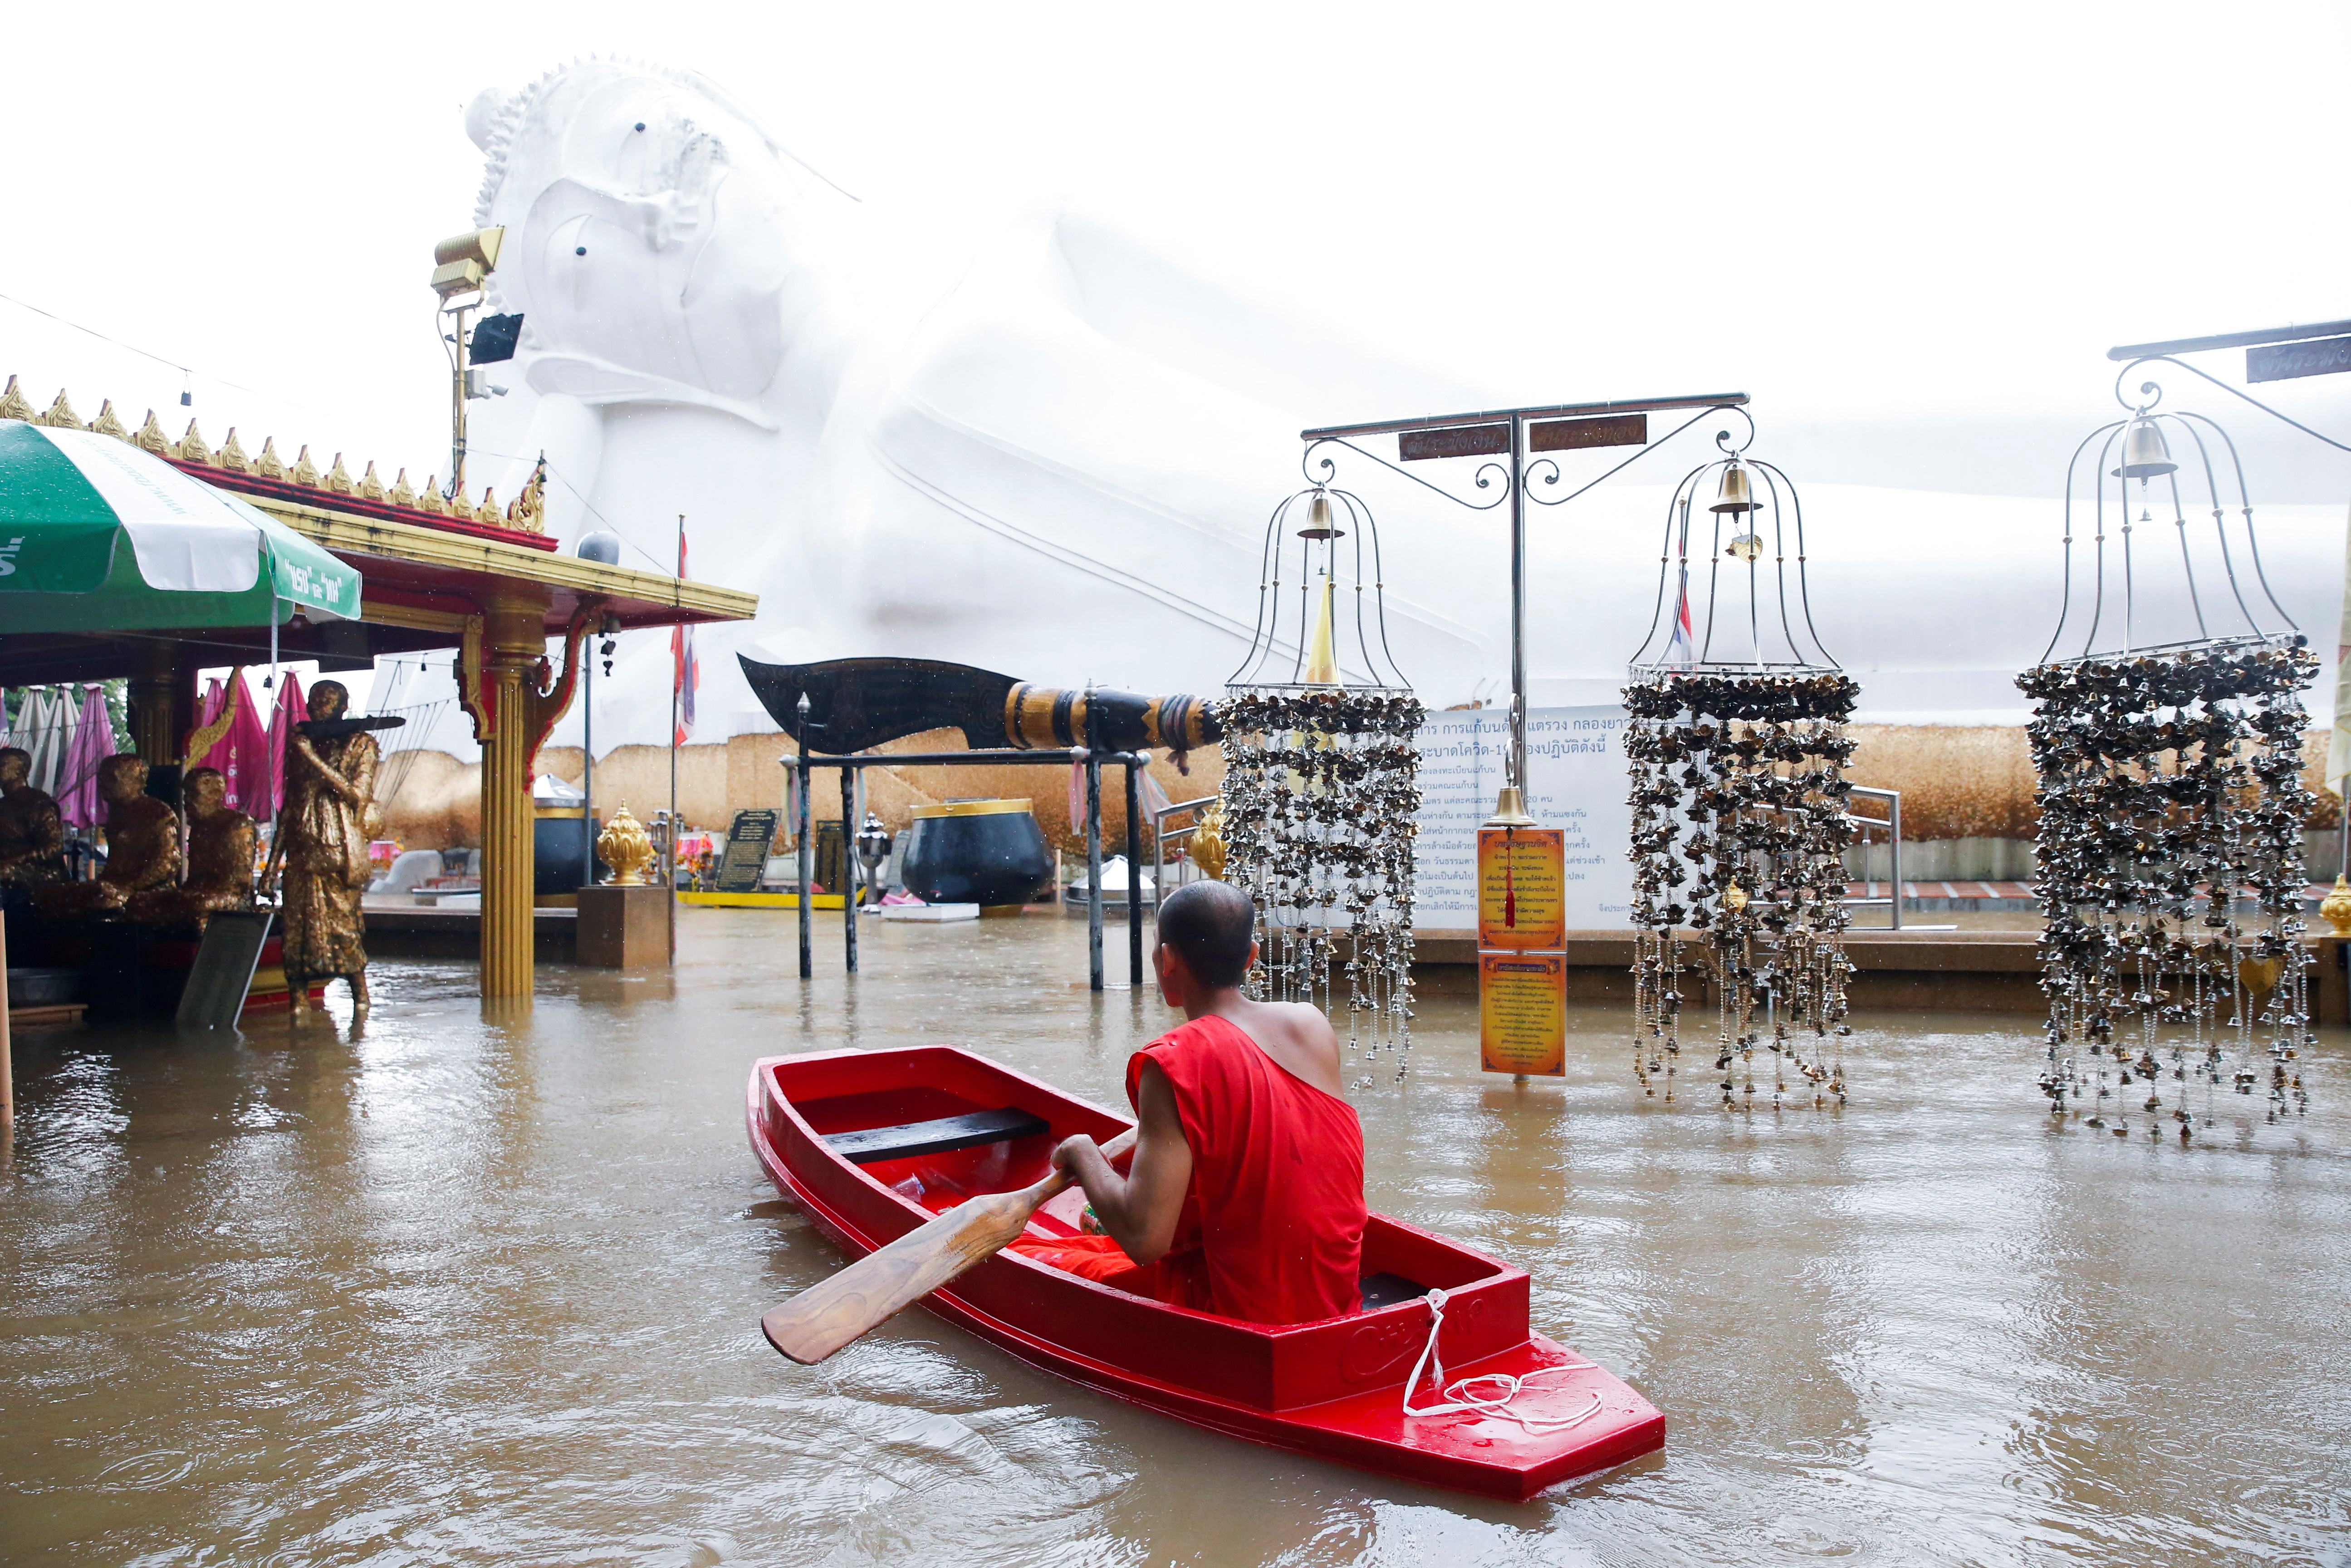 Thailand's flood situation